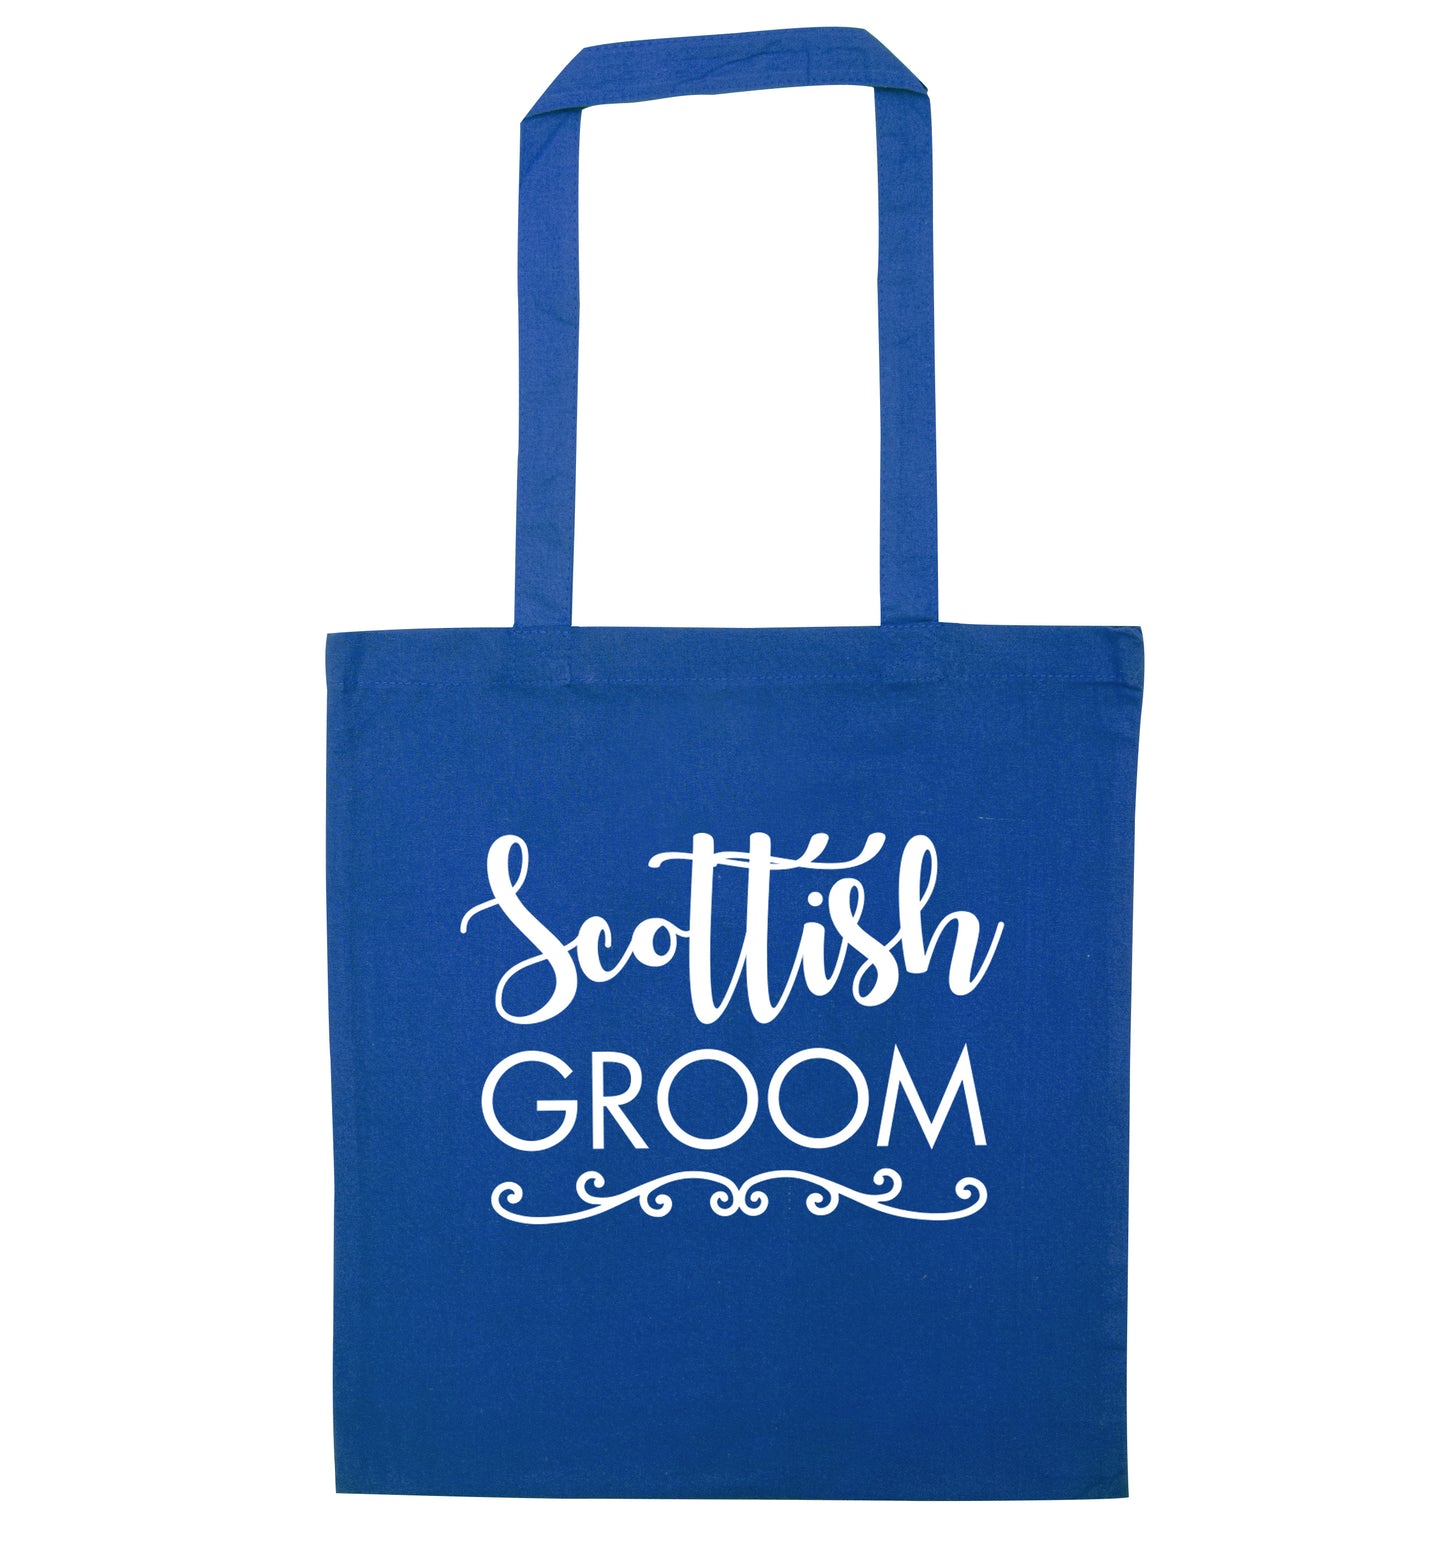 Scottish groom blue tote bag